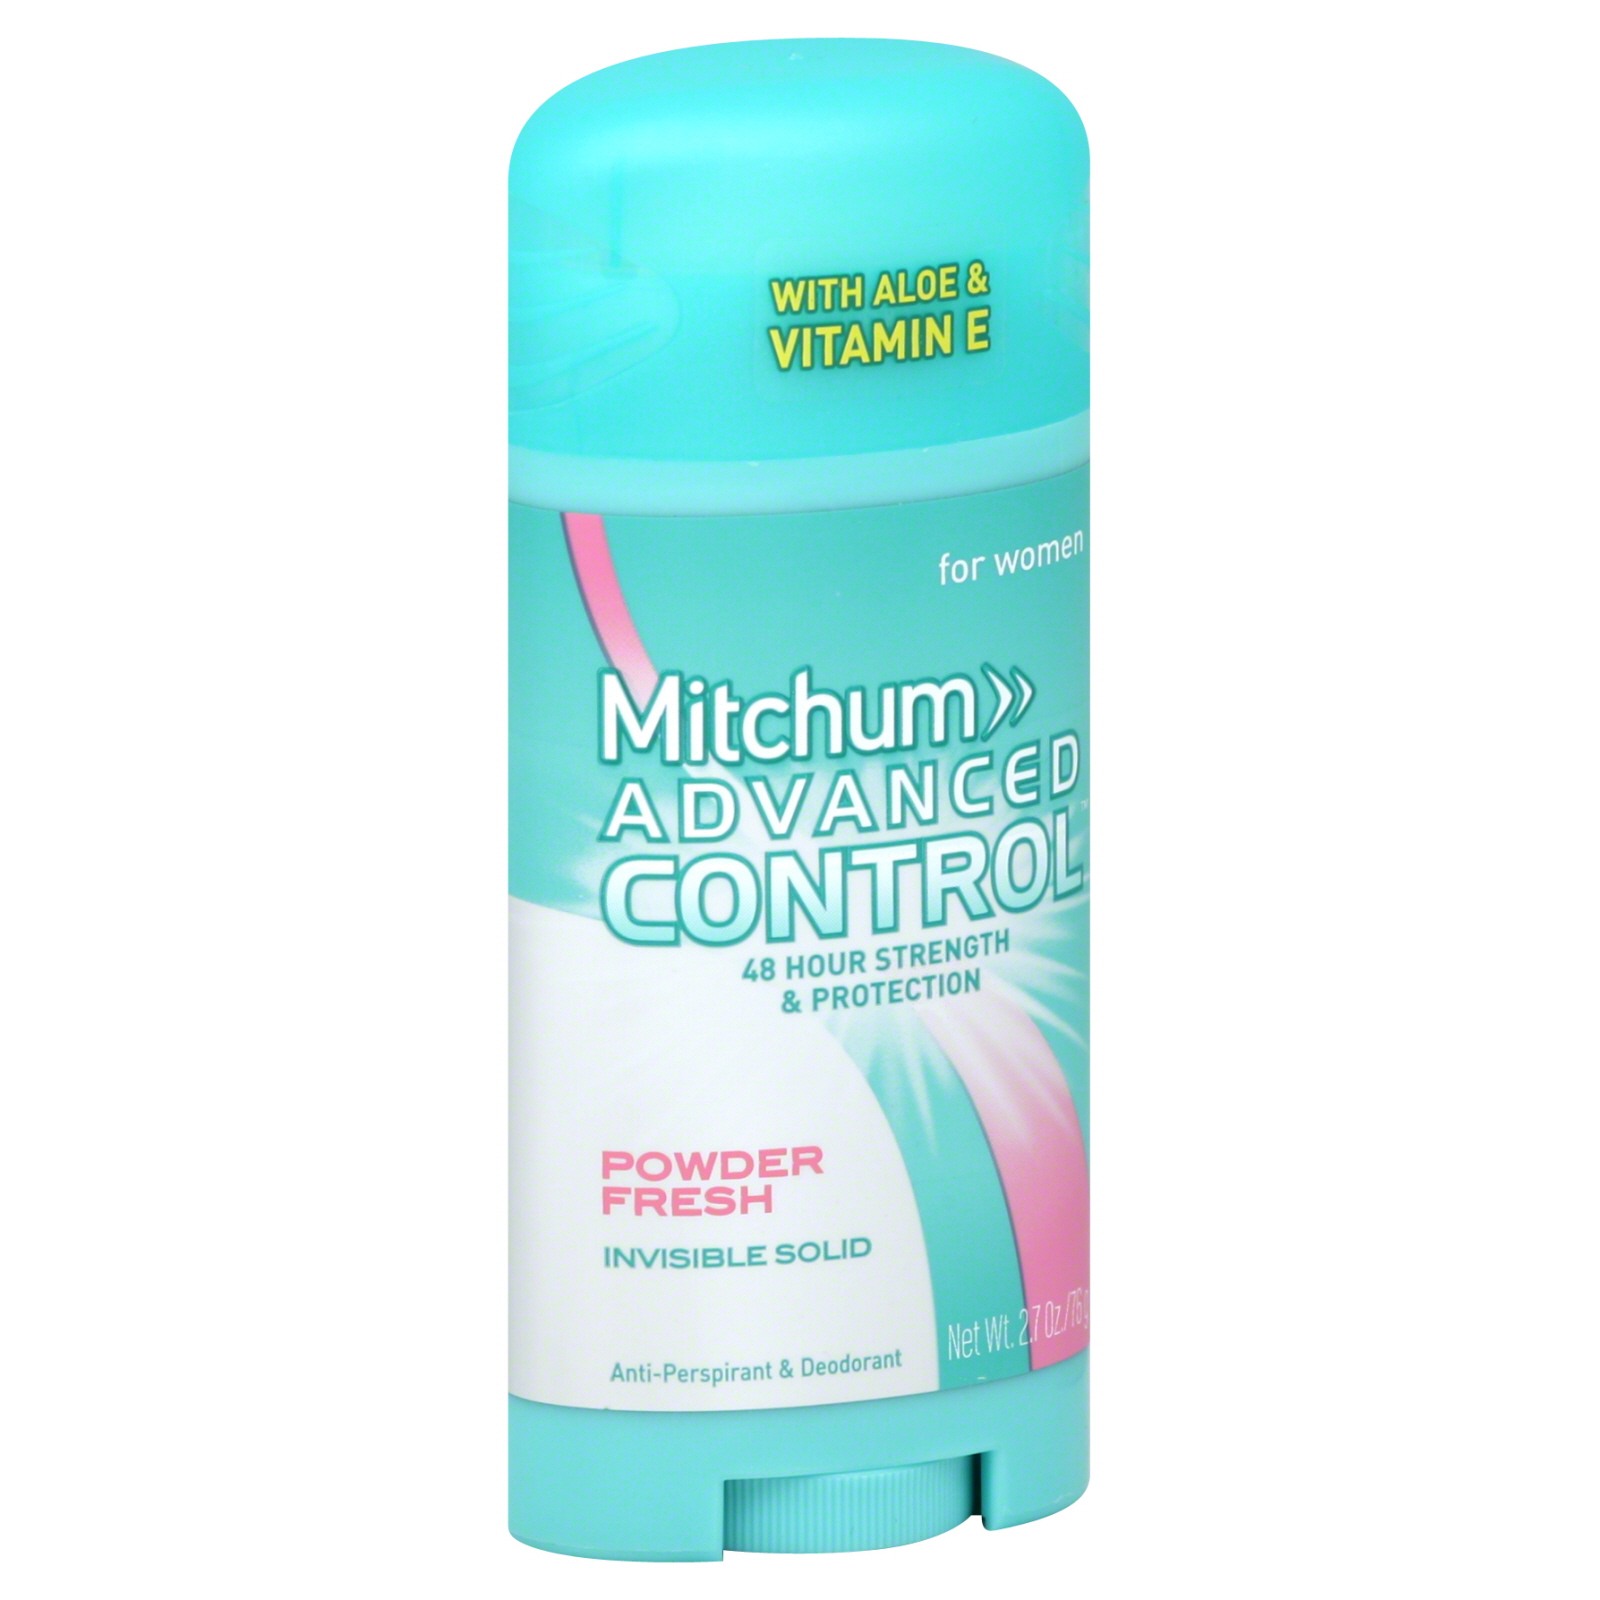 Advanced Control Anti-Perspirant & Deodorant, for Women, Invisible Solid, Powder Fresh 2.7 oz (76 g)